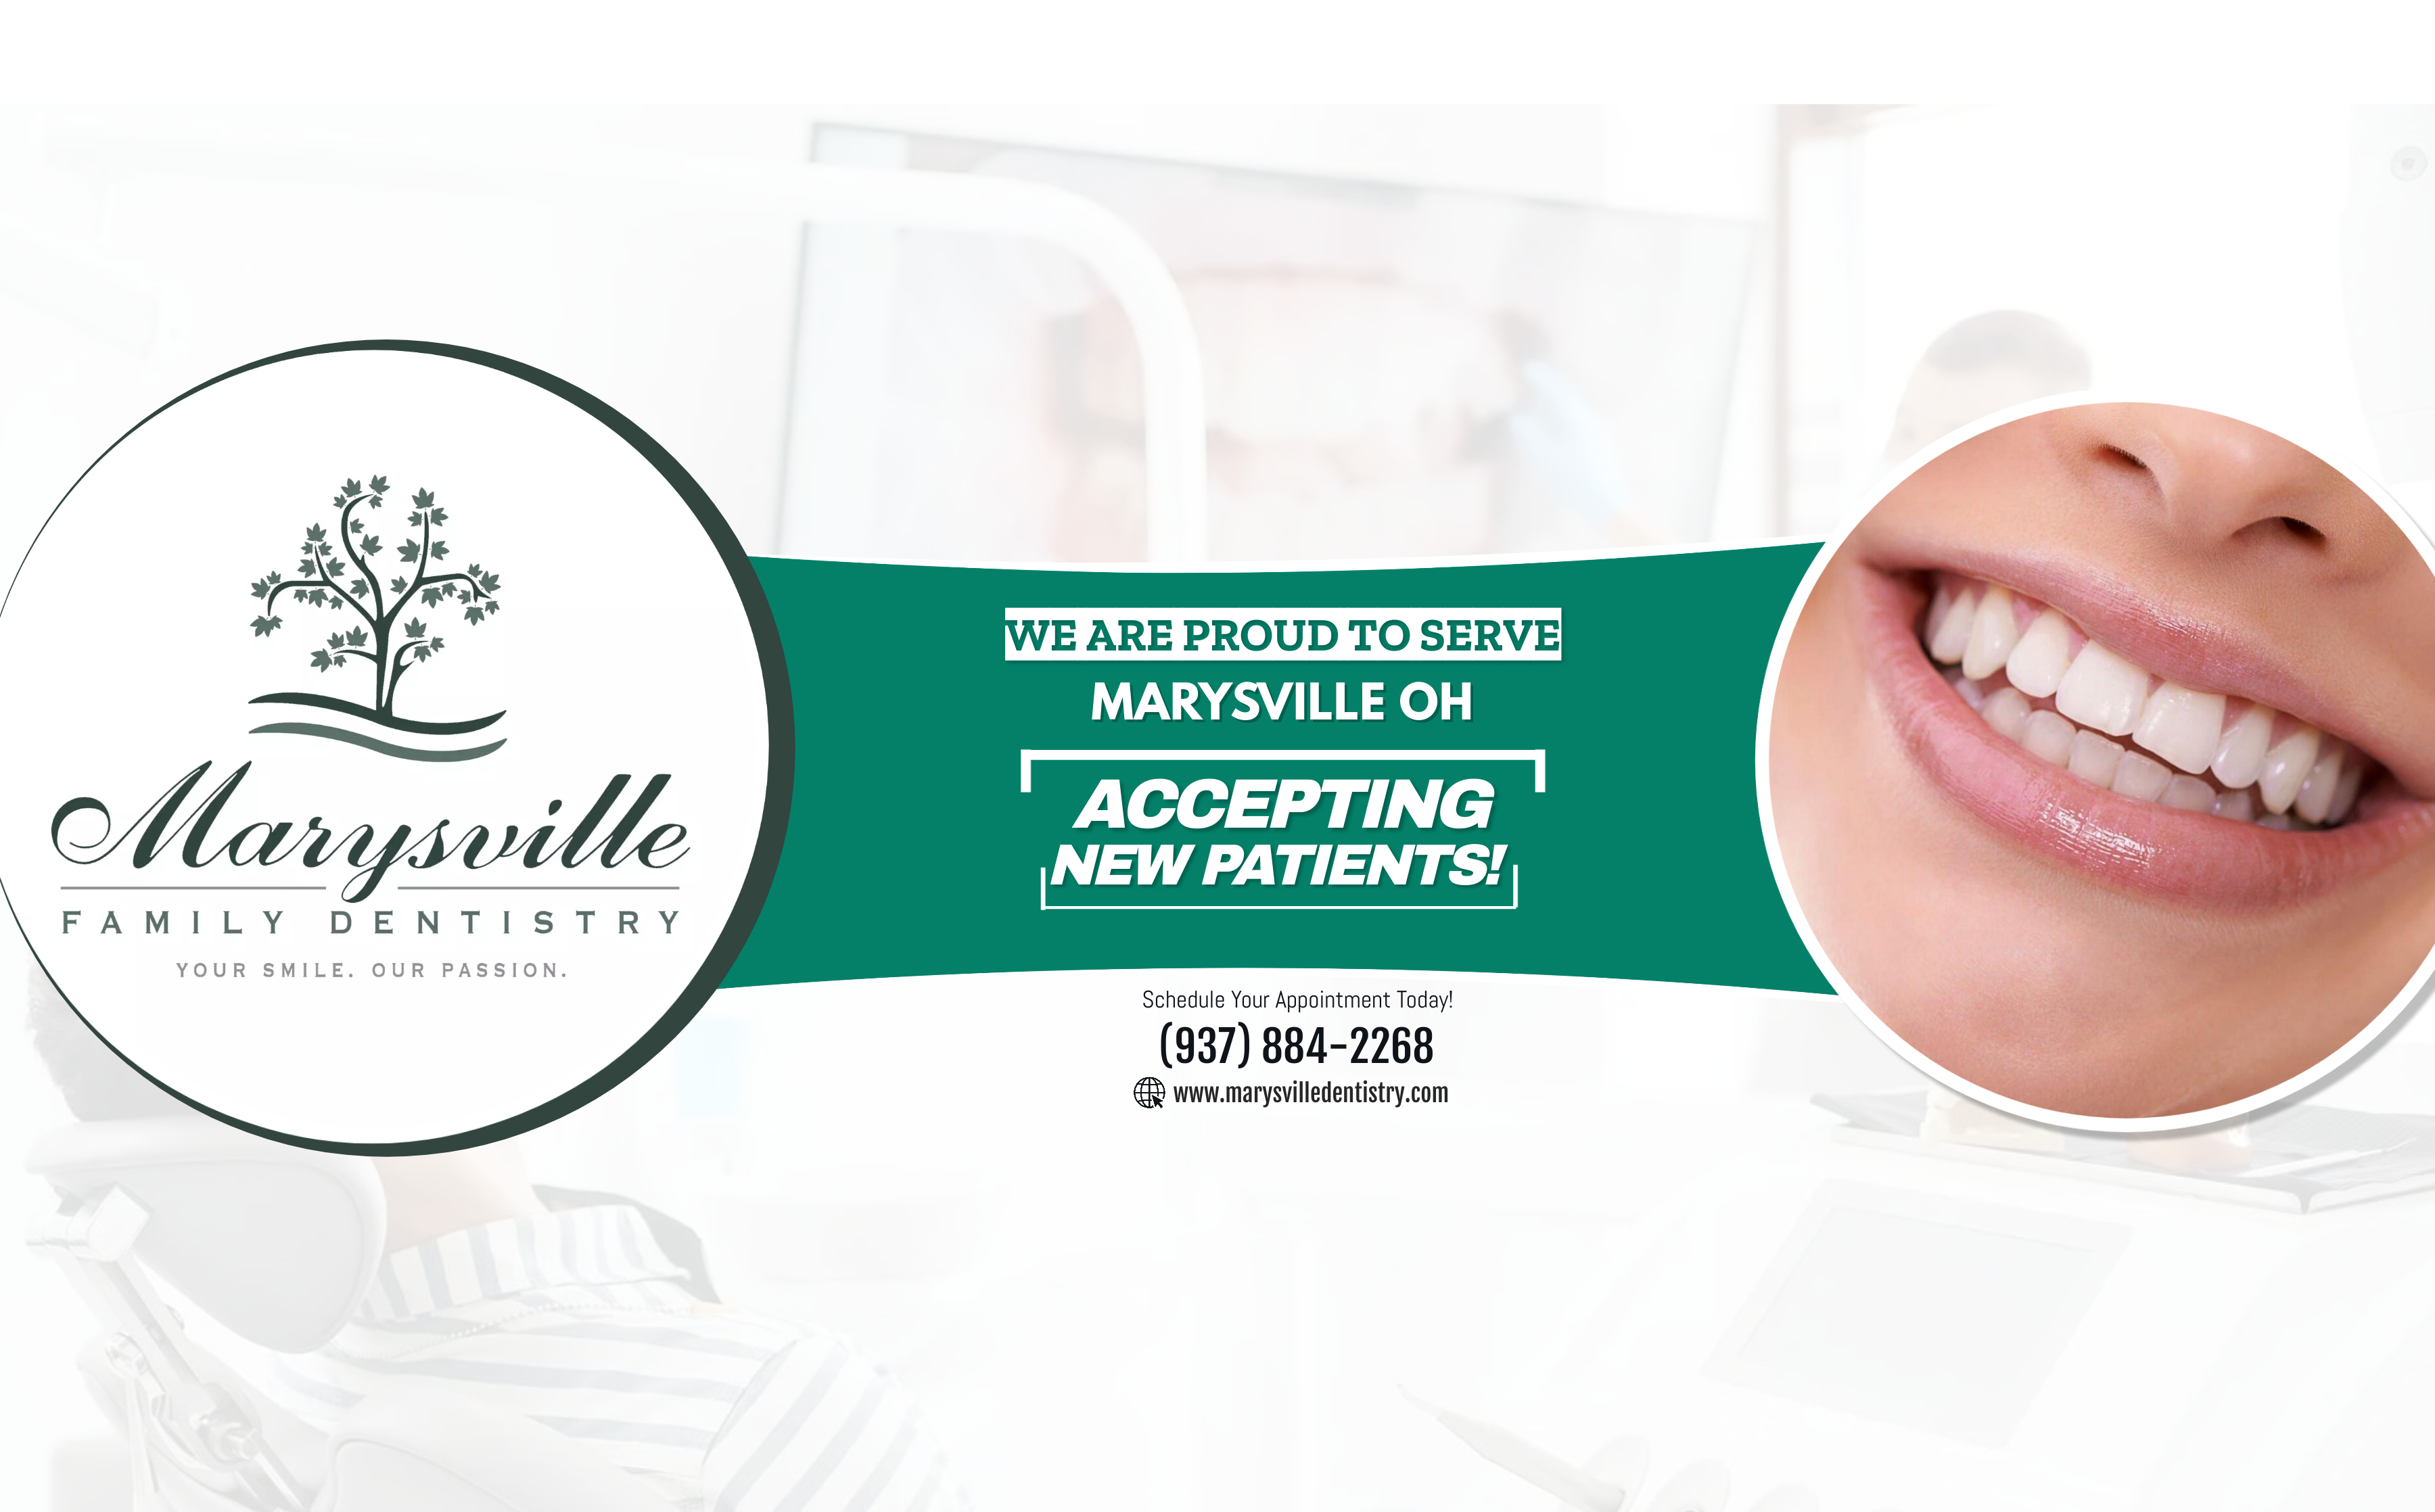 Marysville Family Dentistry